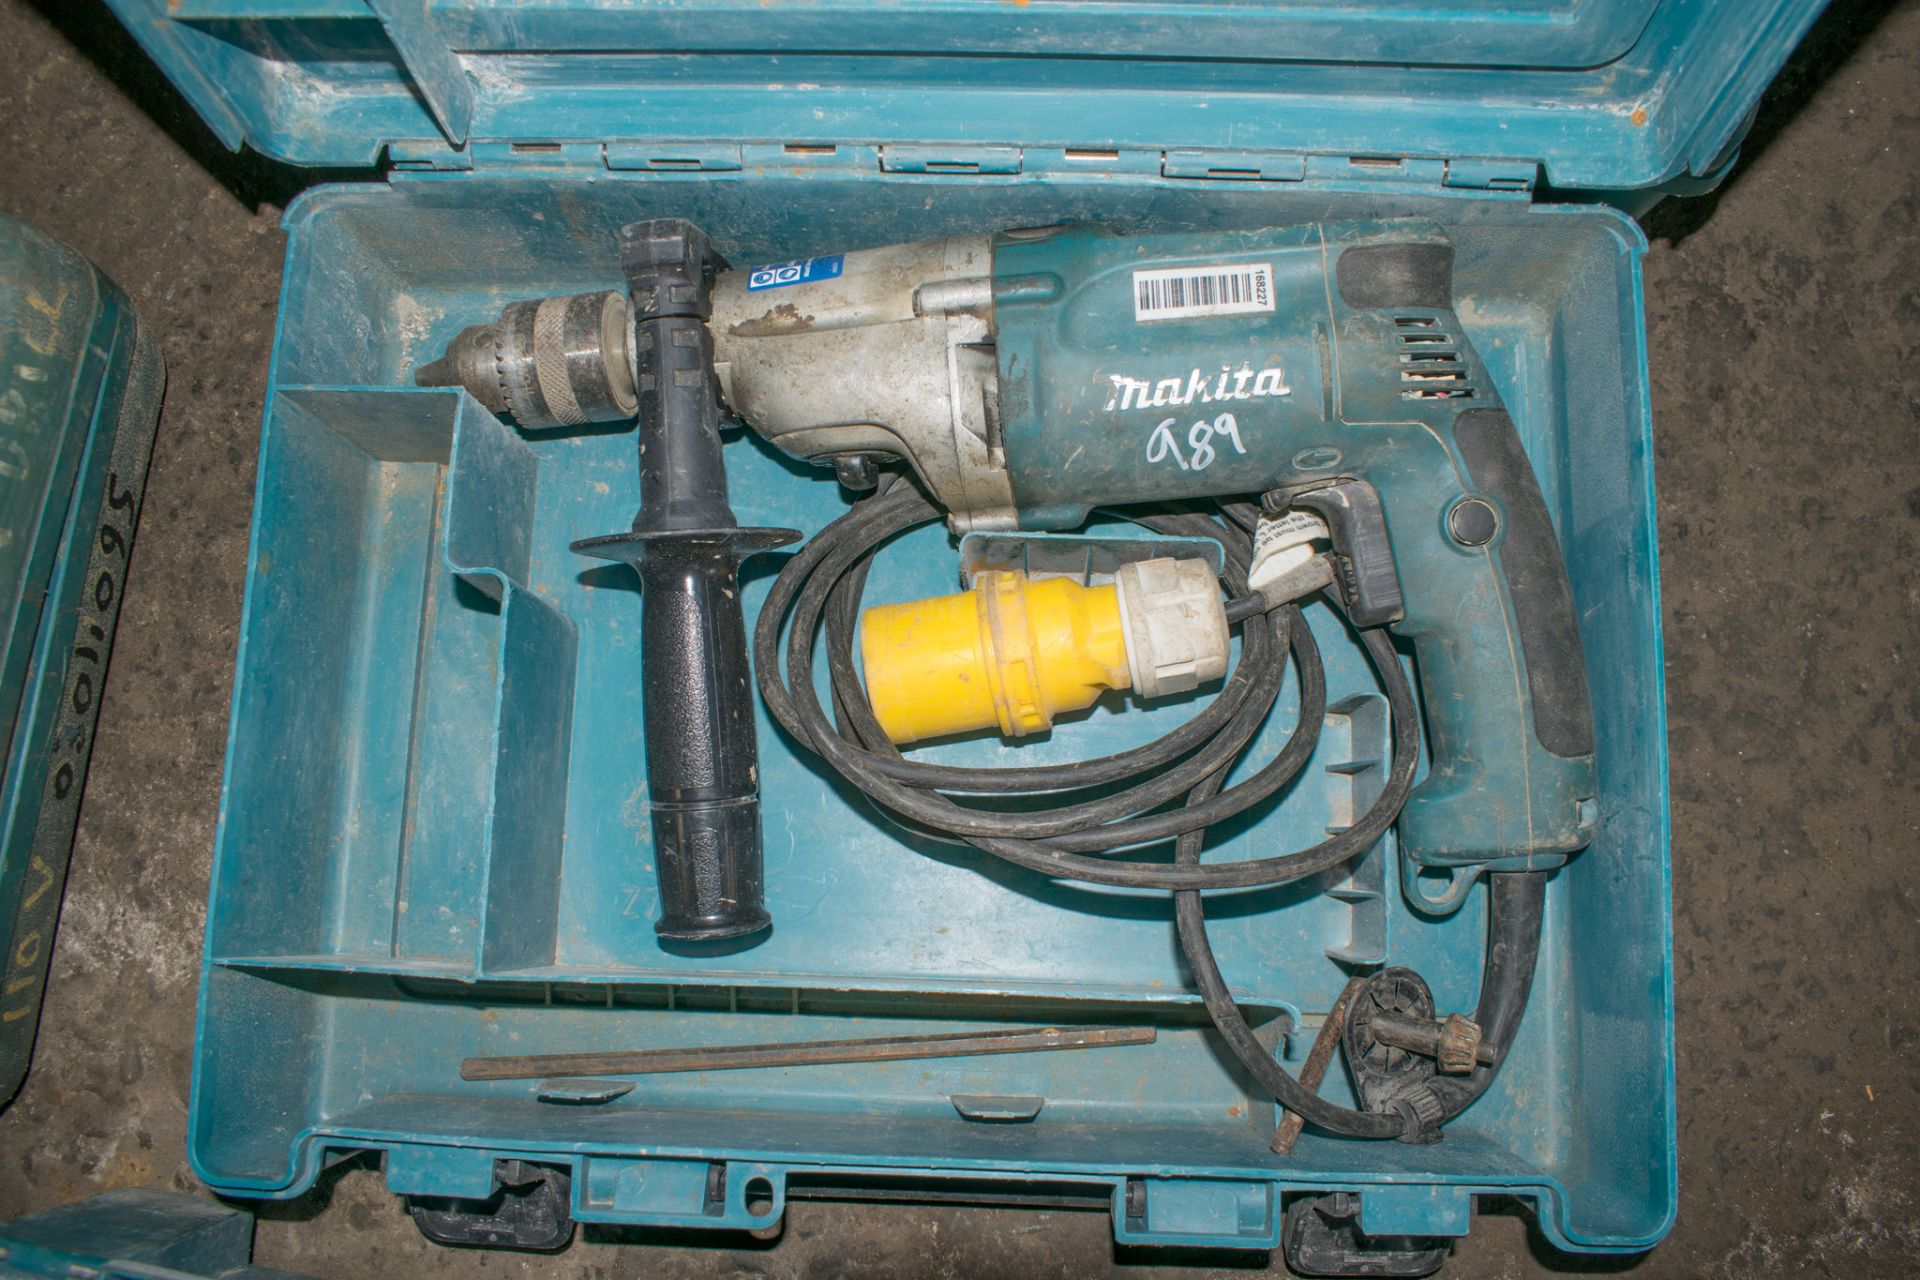 Makita 110v power drill c/w carry case